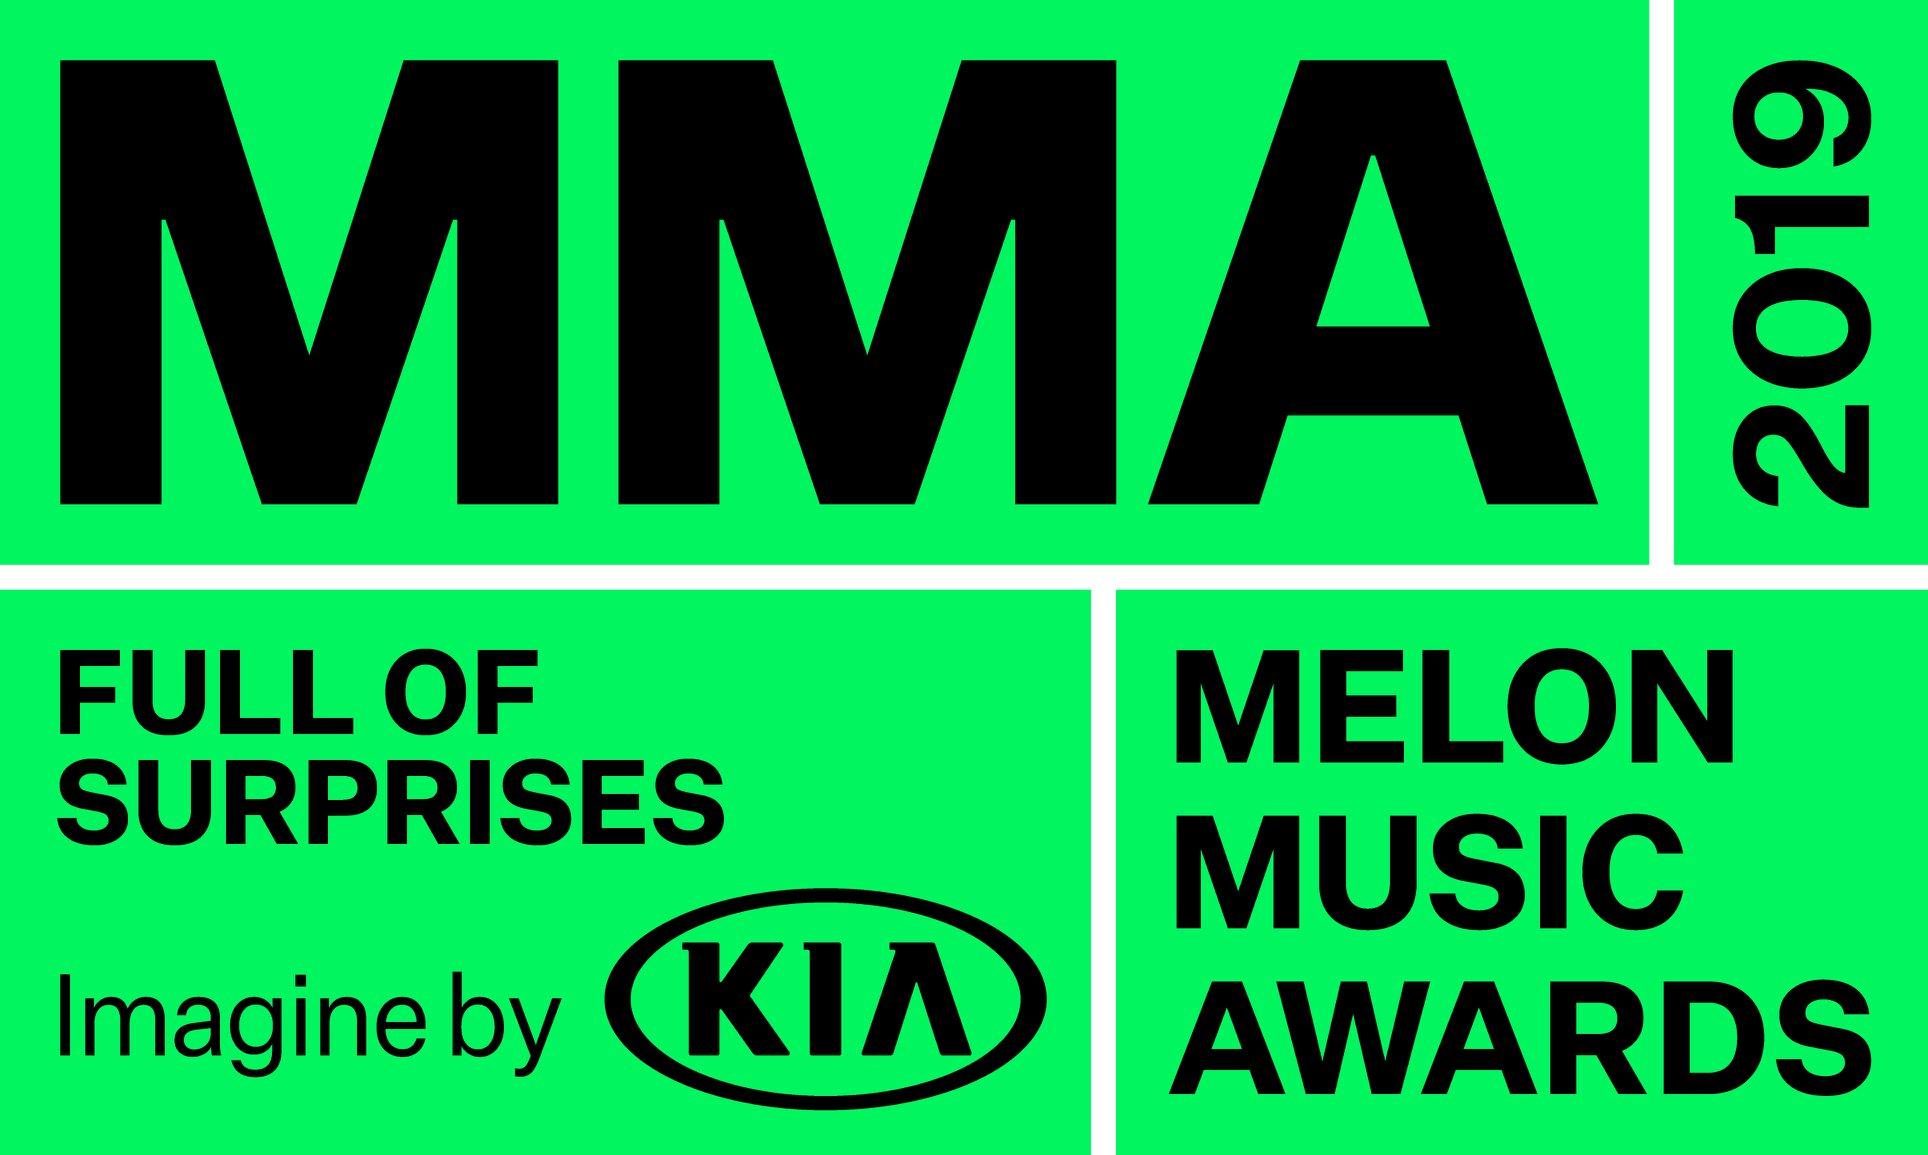 Melon music awards